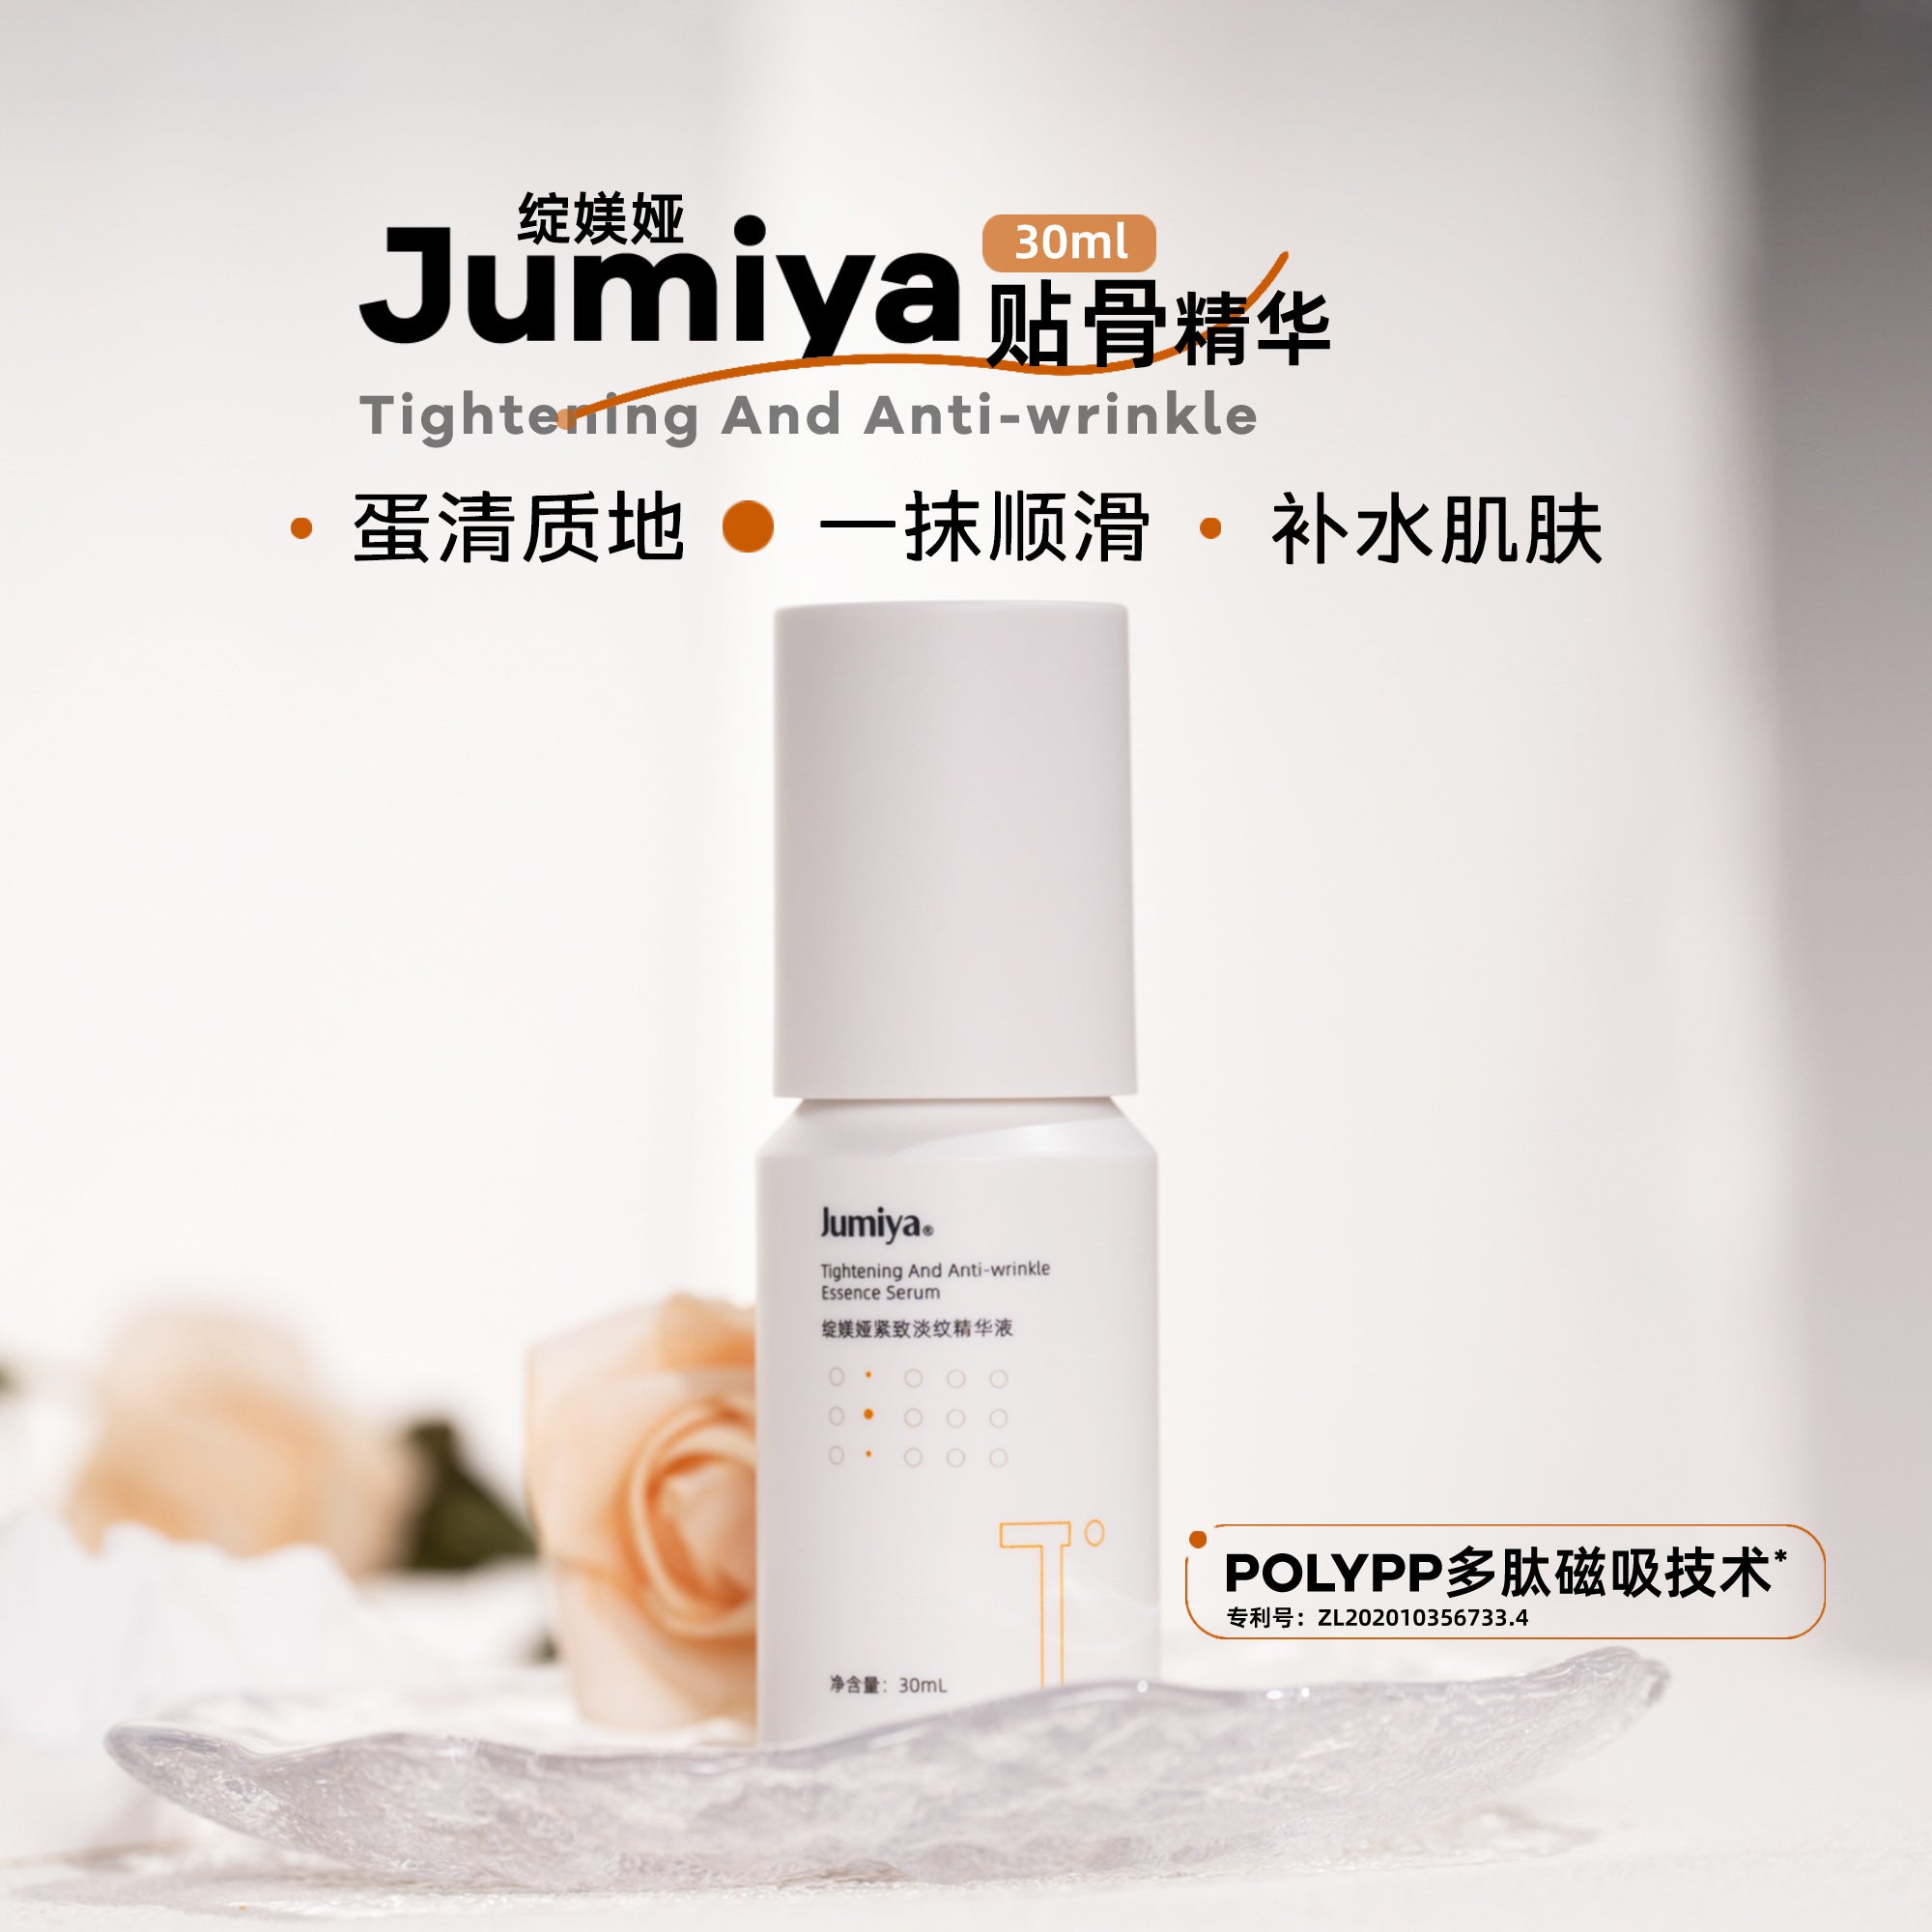 Jumiya Tightening & Anti-wrinkle Essence Serum 30ml/10ml 绽媄娅紧致淡纹精华液贴骨精华